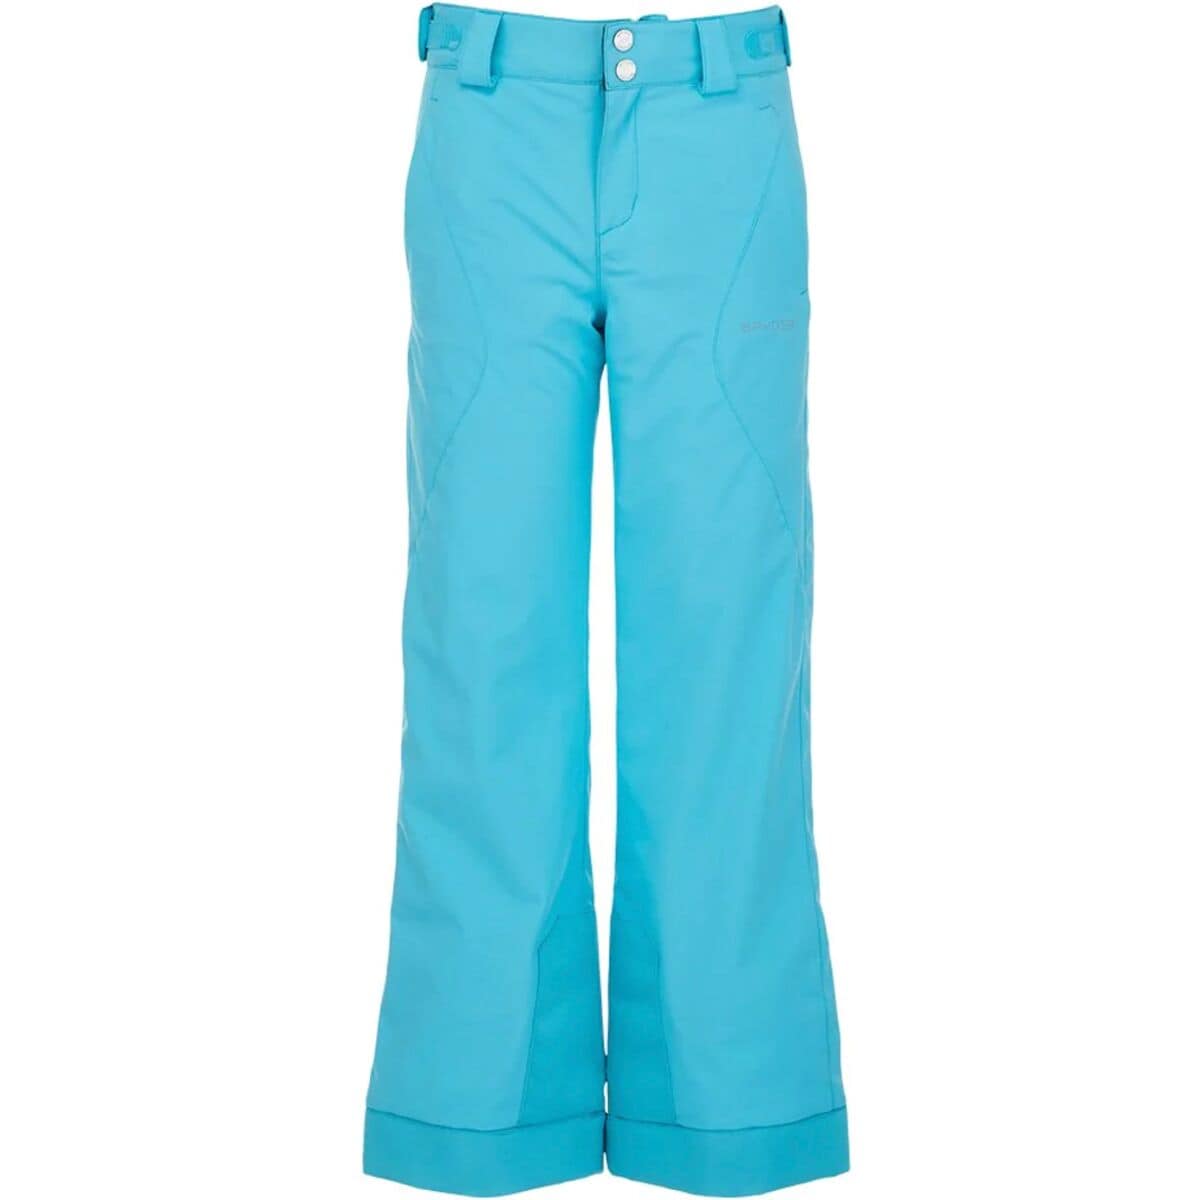 Spyder Olympia Regular Pant - Girls' Bahama Blue